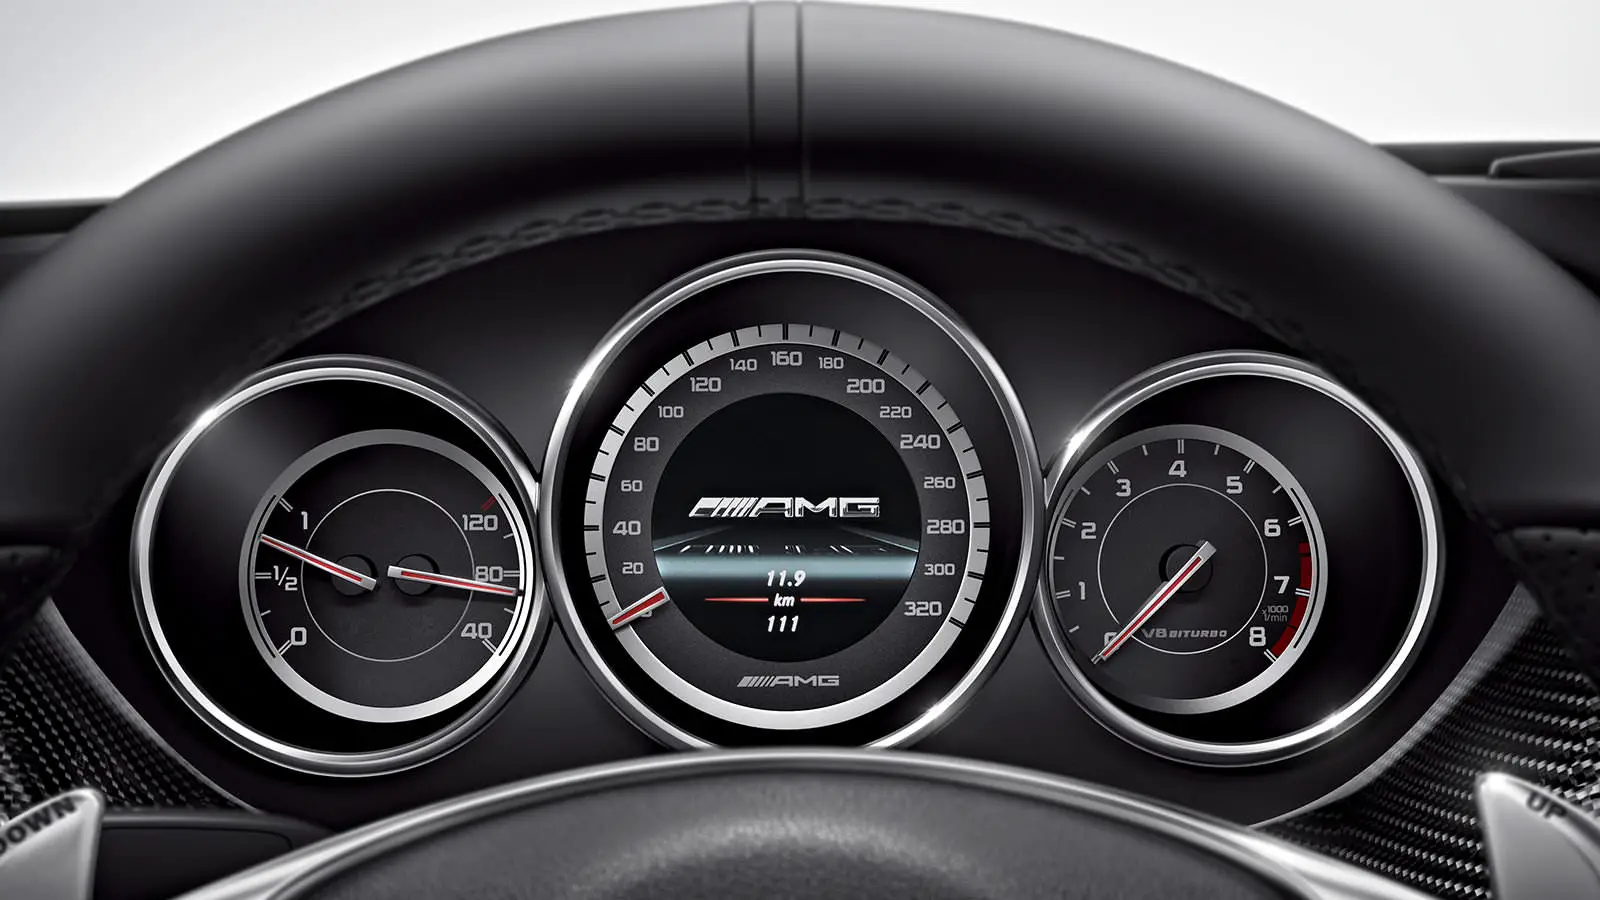 Mercedes Benz AMG CLS 63 S speedometr view